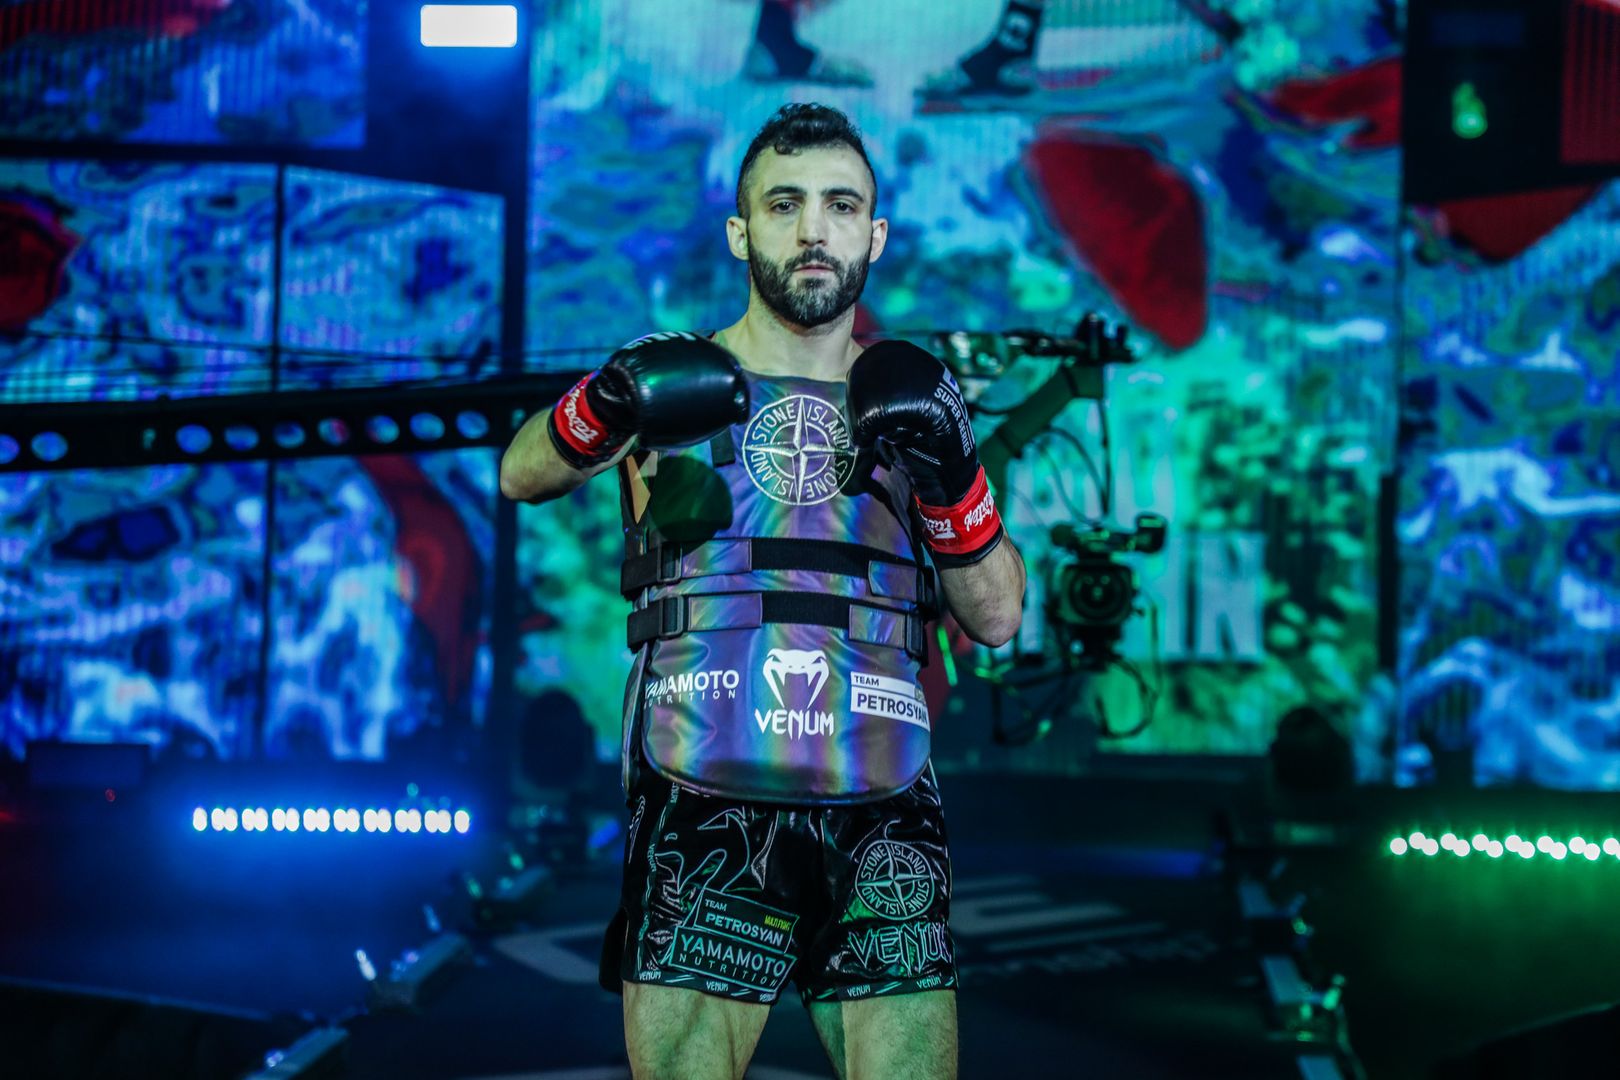 Giorgio Petrosyan fights Davit Kiria at ONE: FISTS OF FURY